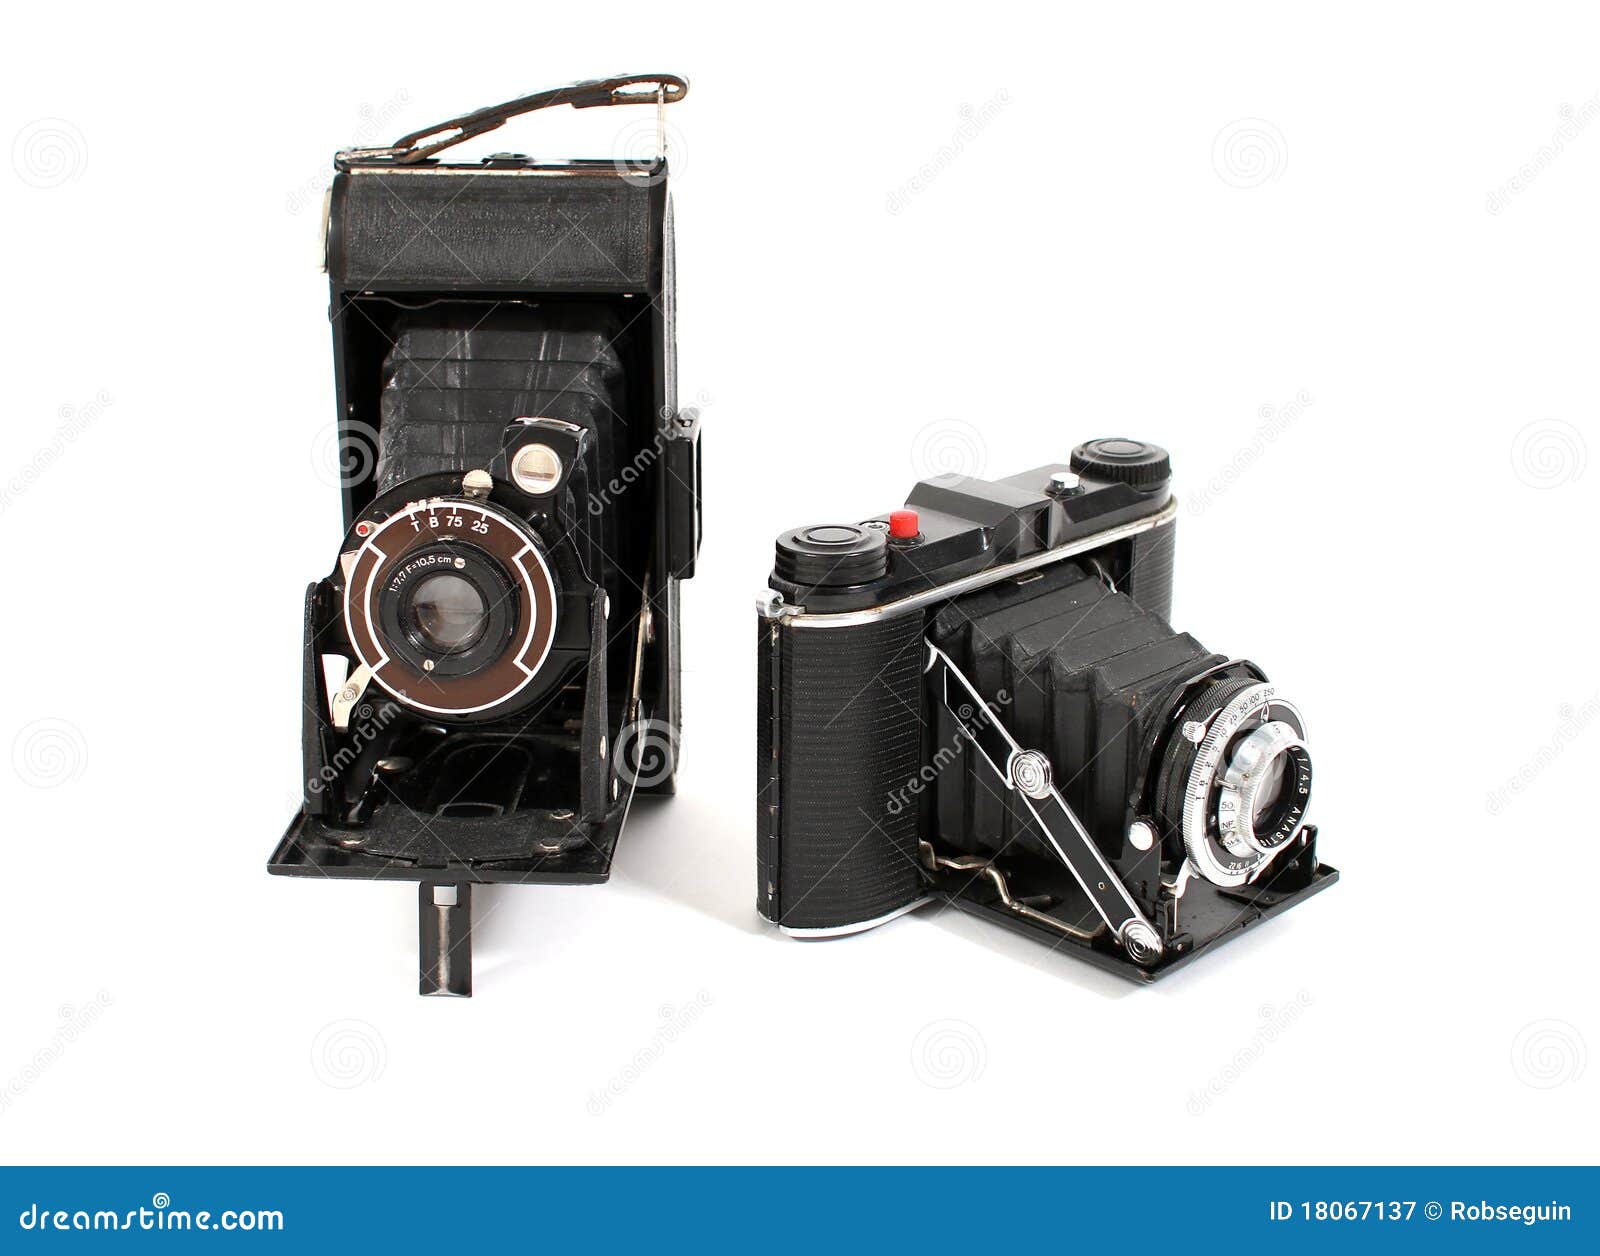 film camera vintage